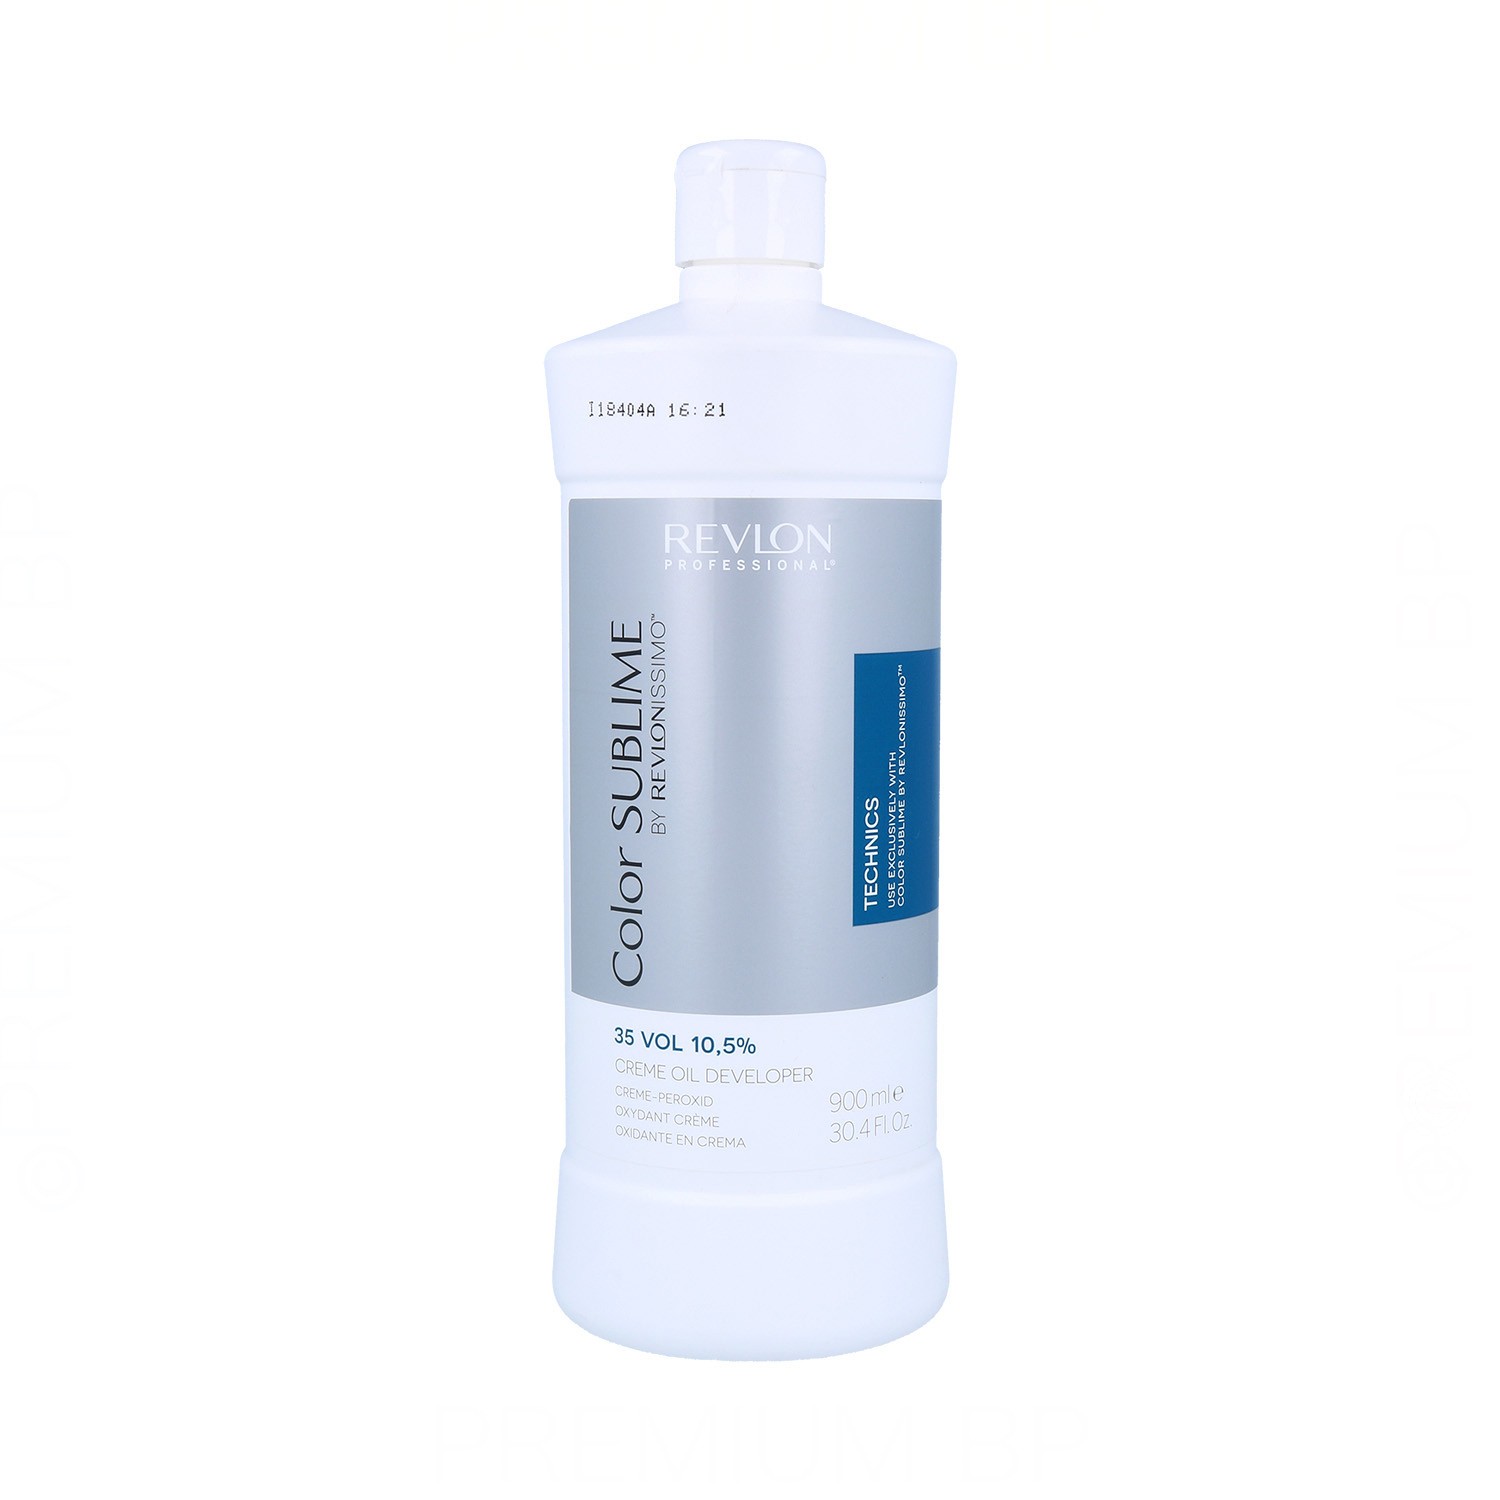 Revlonissimo Color Sublime Cream Oil Developer 35Vol (10.5%) 900 ml